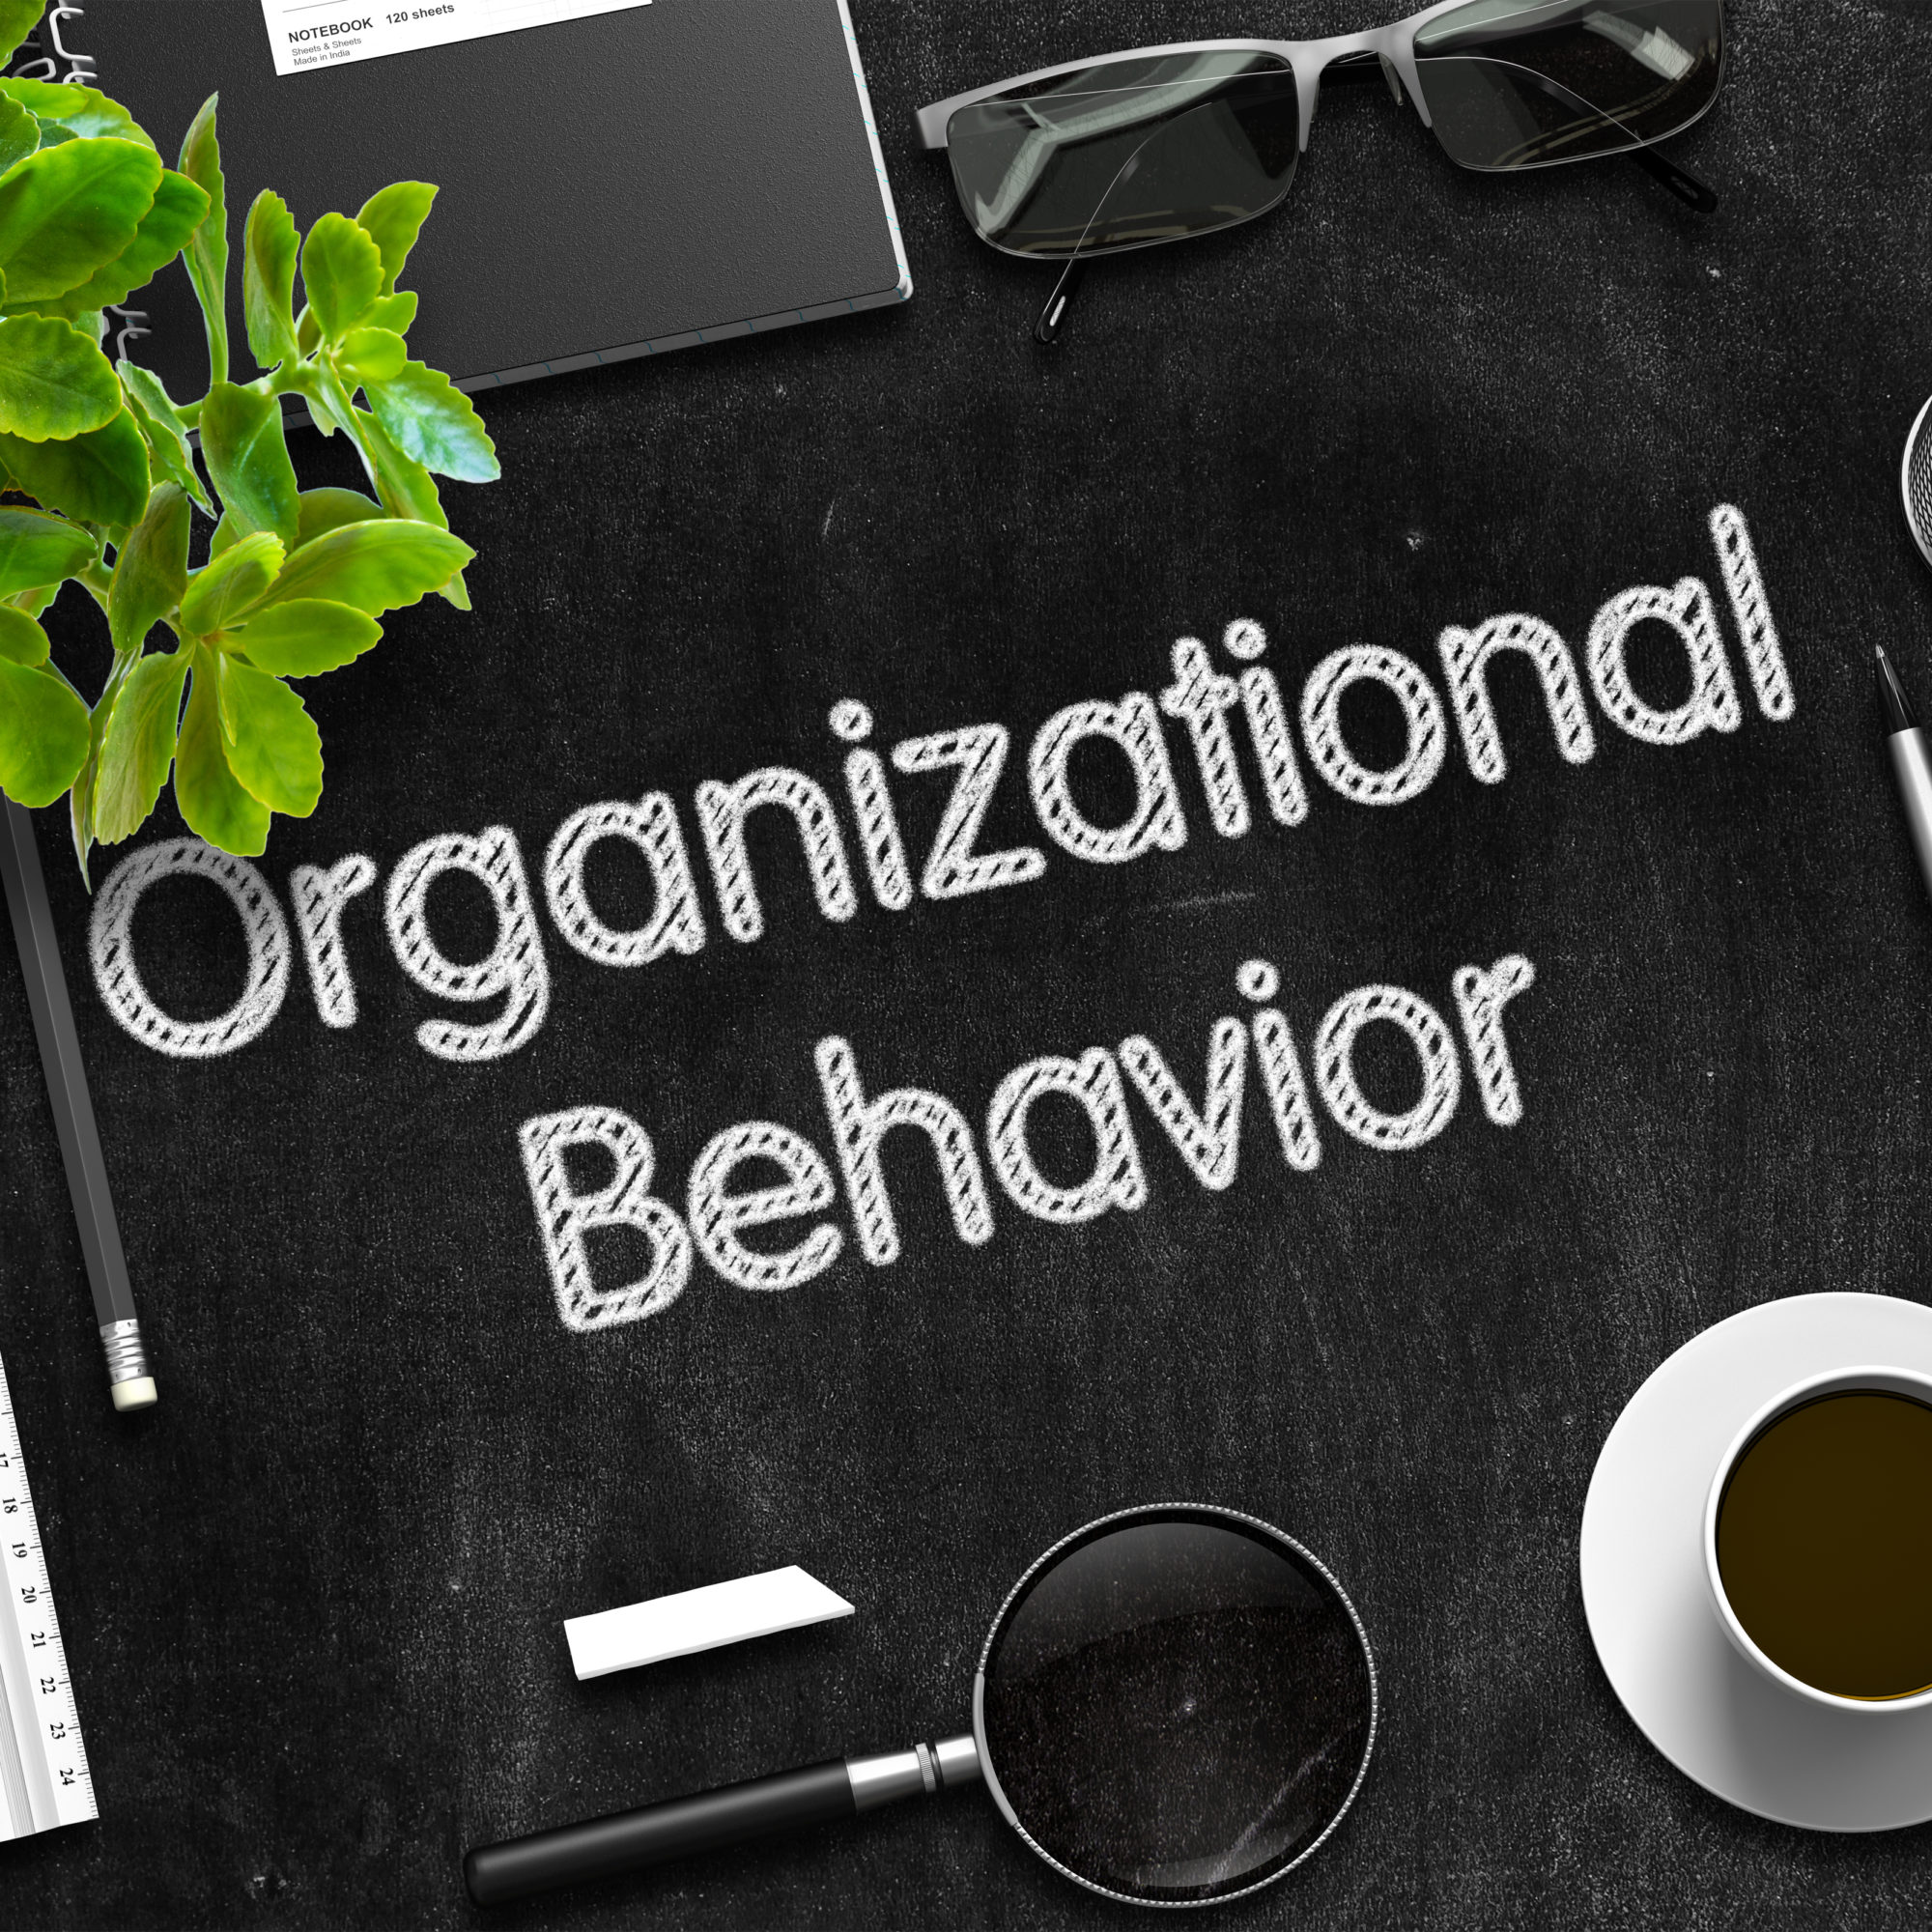 organizational behavior phd topics